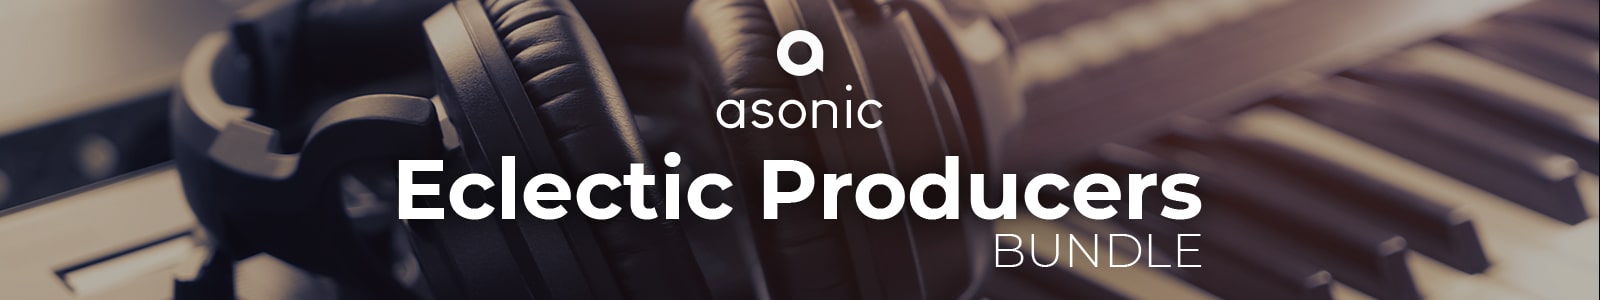 Asonic Eclectic Producers Bundle